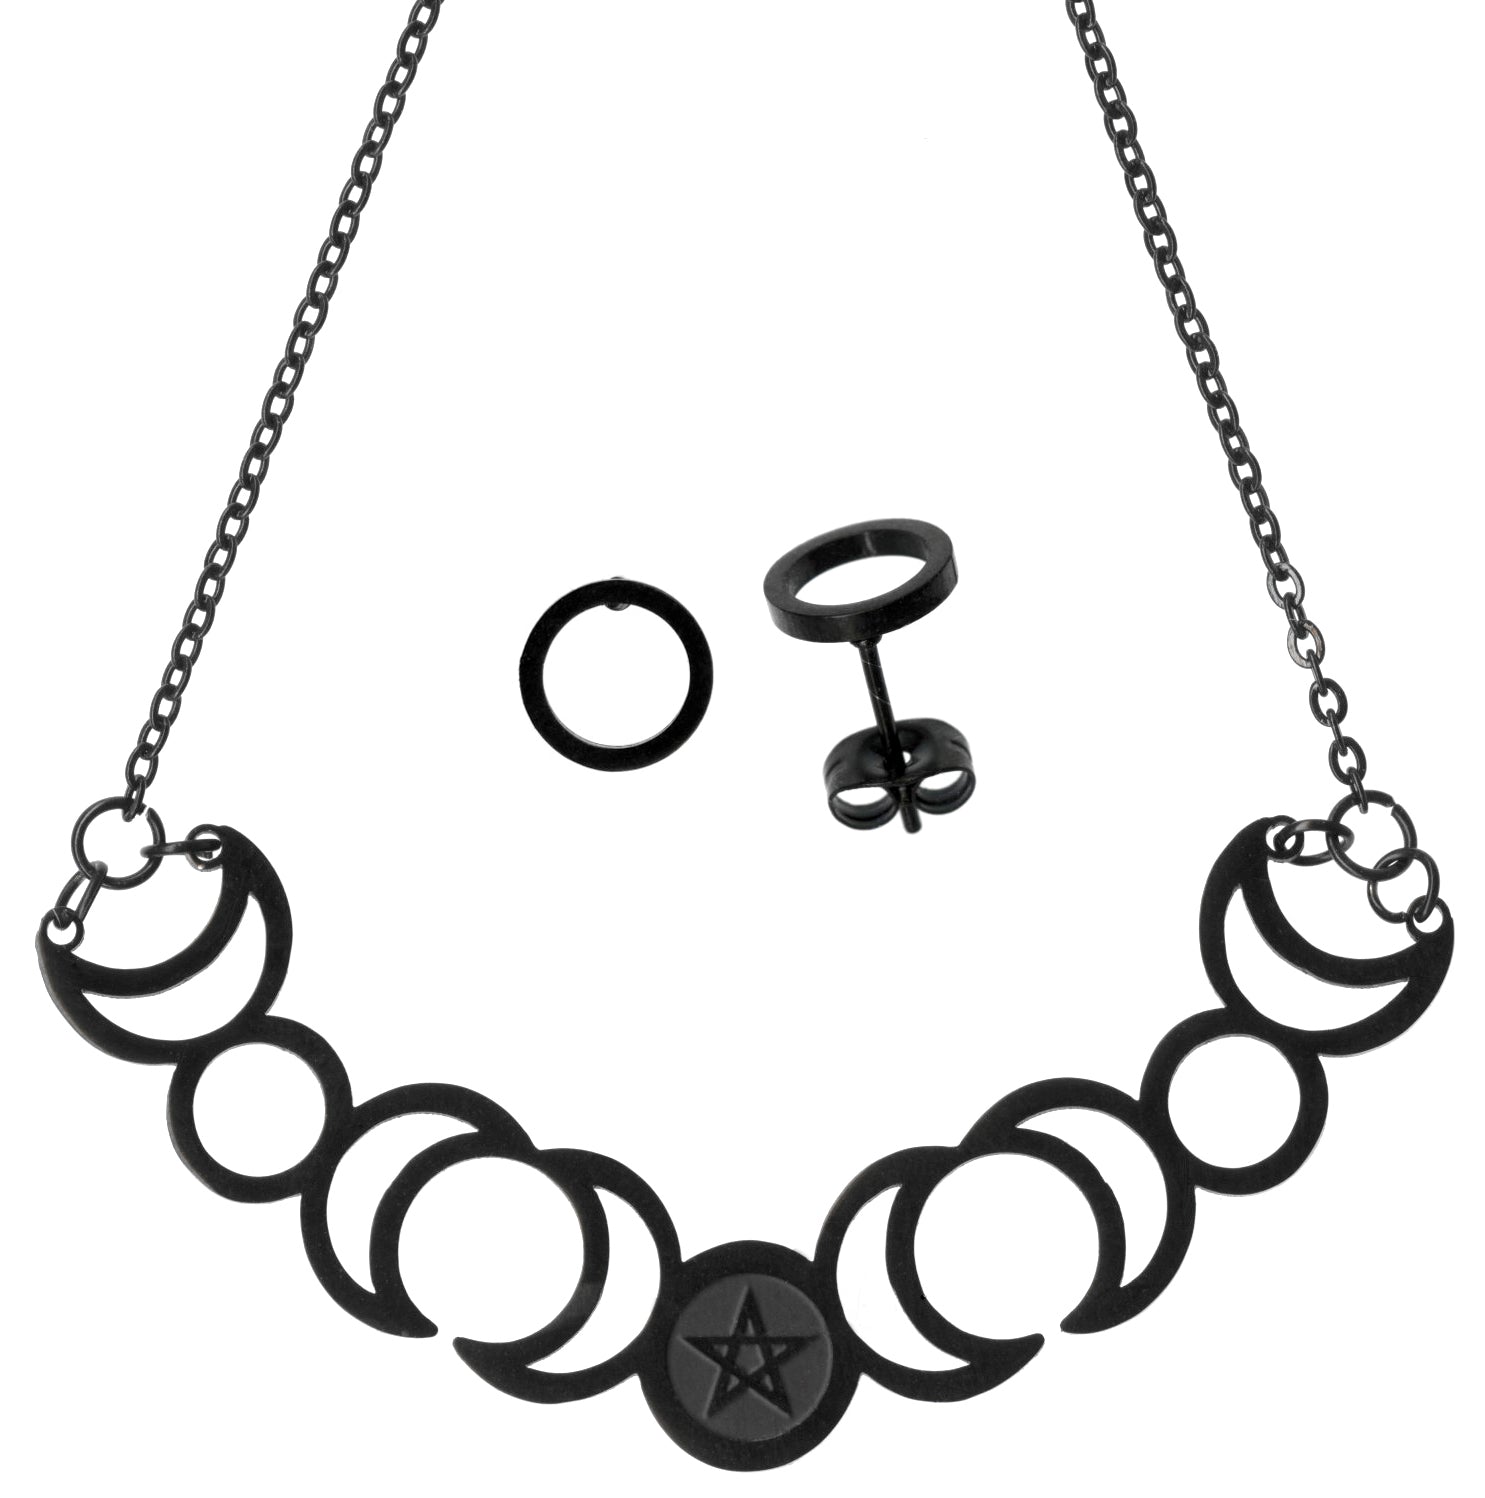 Triple Moon Pentacle Wicca Black Stainless Steel Necklace and Stud Earrings Set